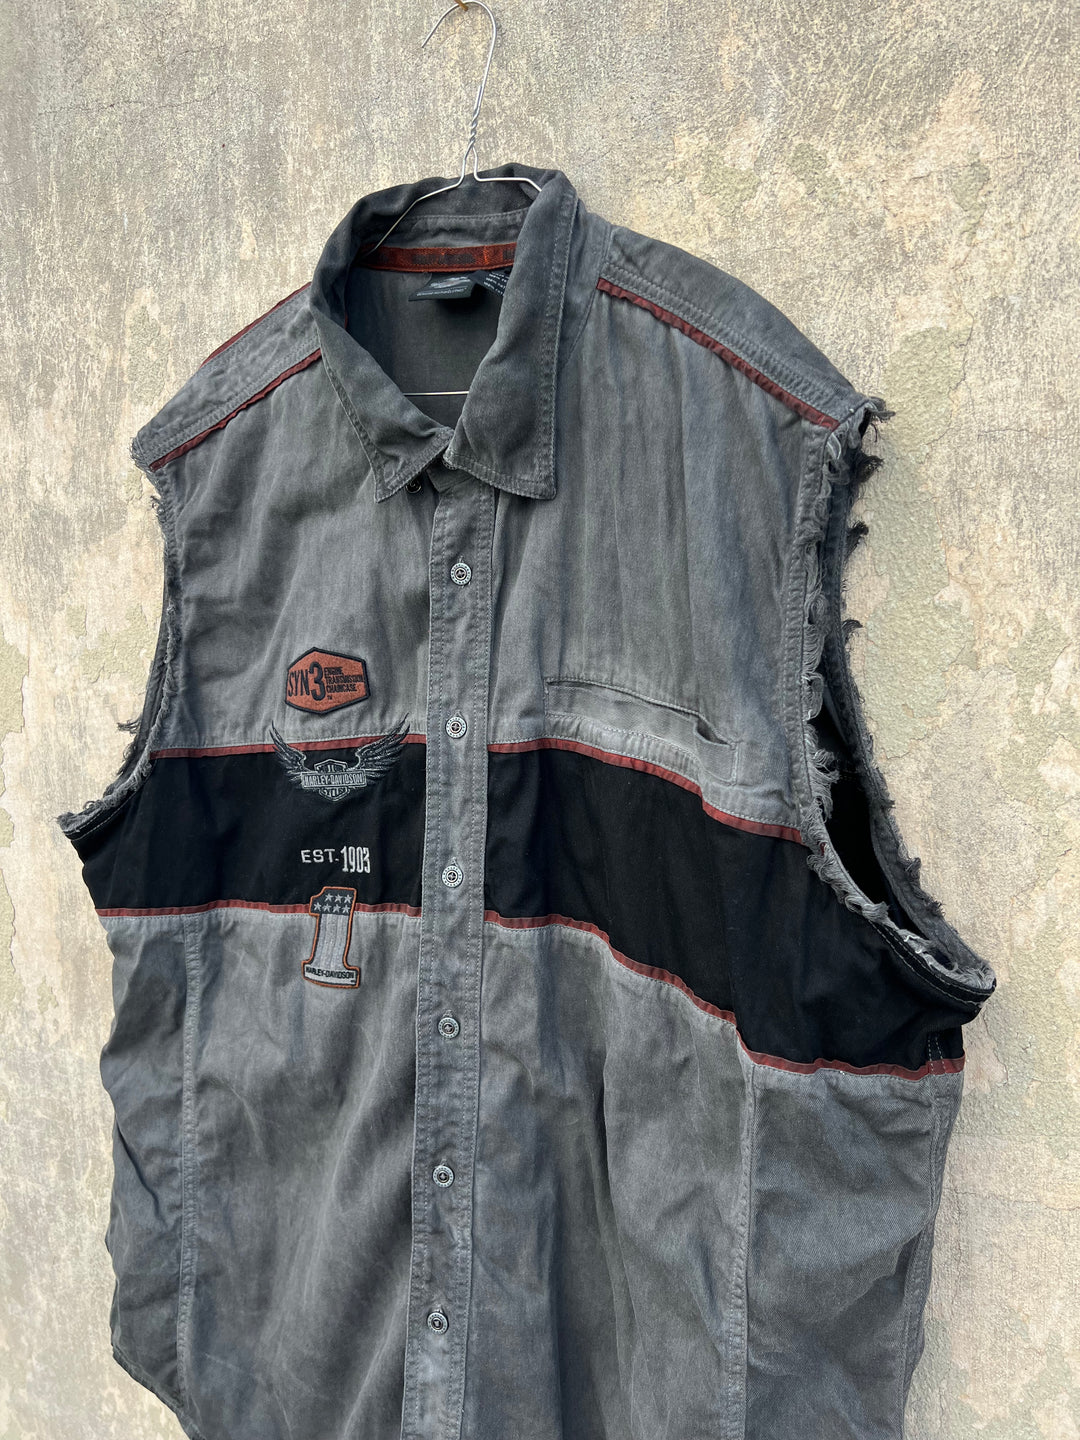 Harley Davidson Vintage Iron Block Blowout Sleeveless Shirt Men’s Extra Large